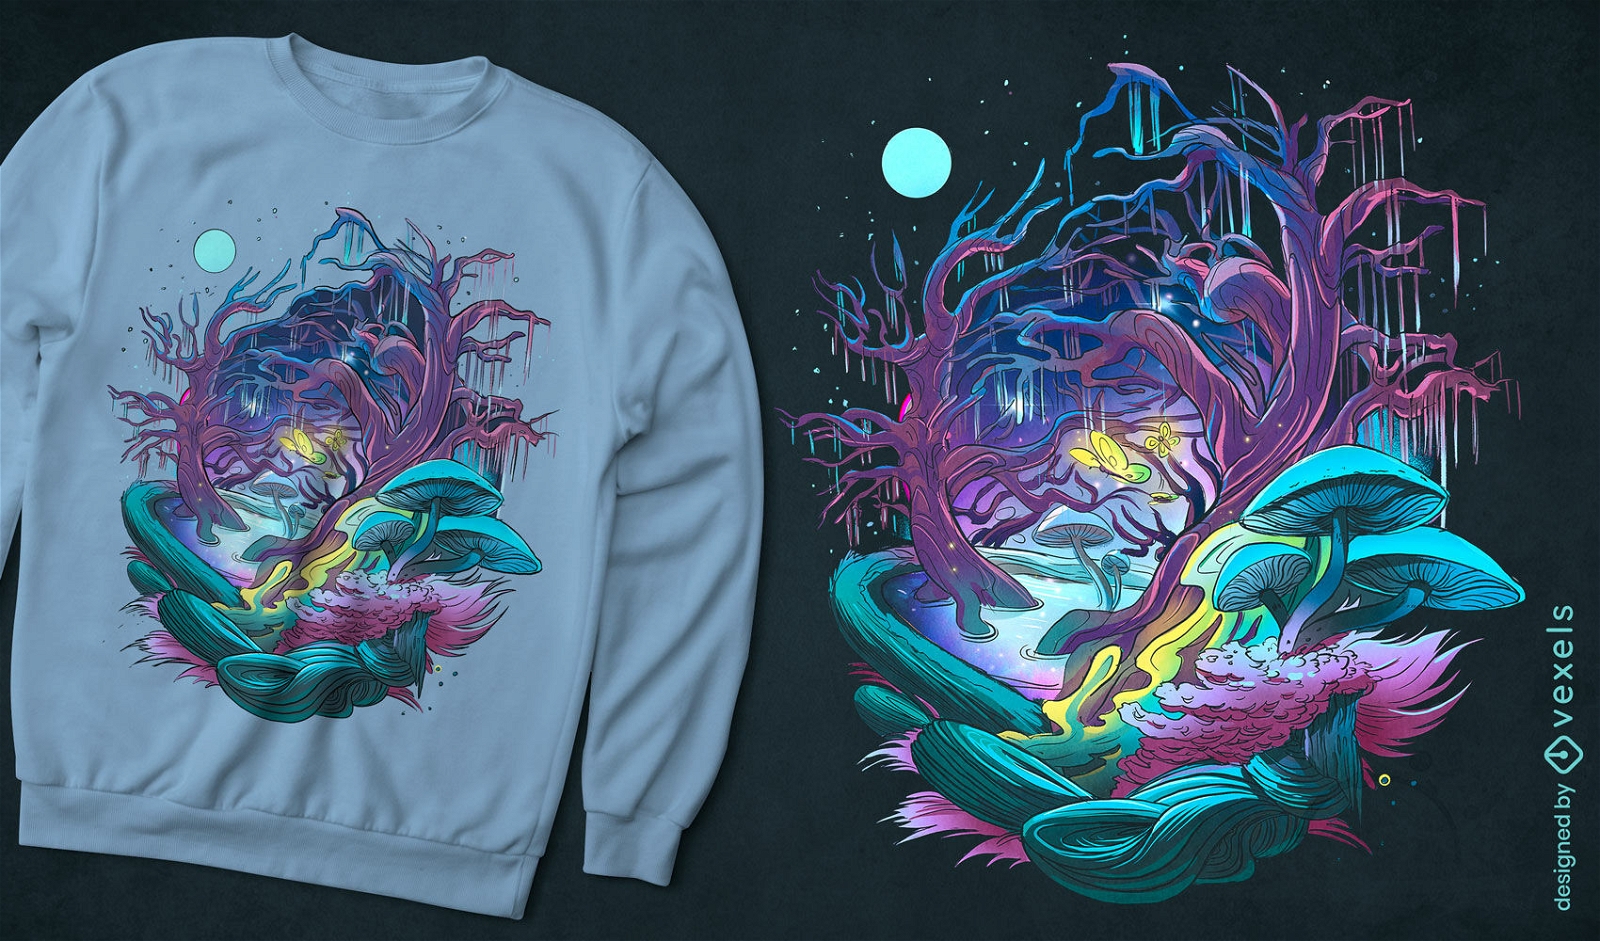 Fantasy forest mushroom and trees t-shirt design